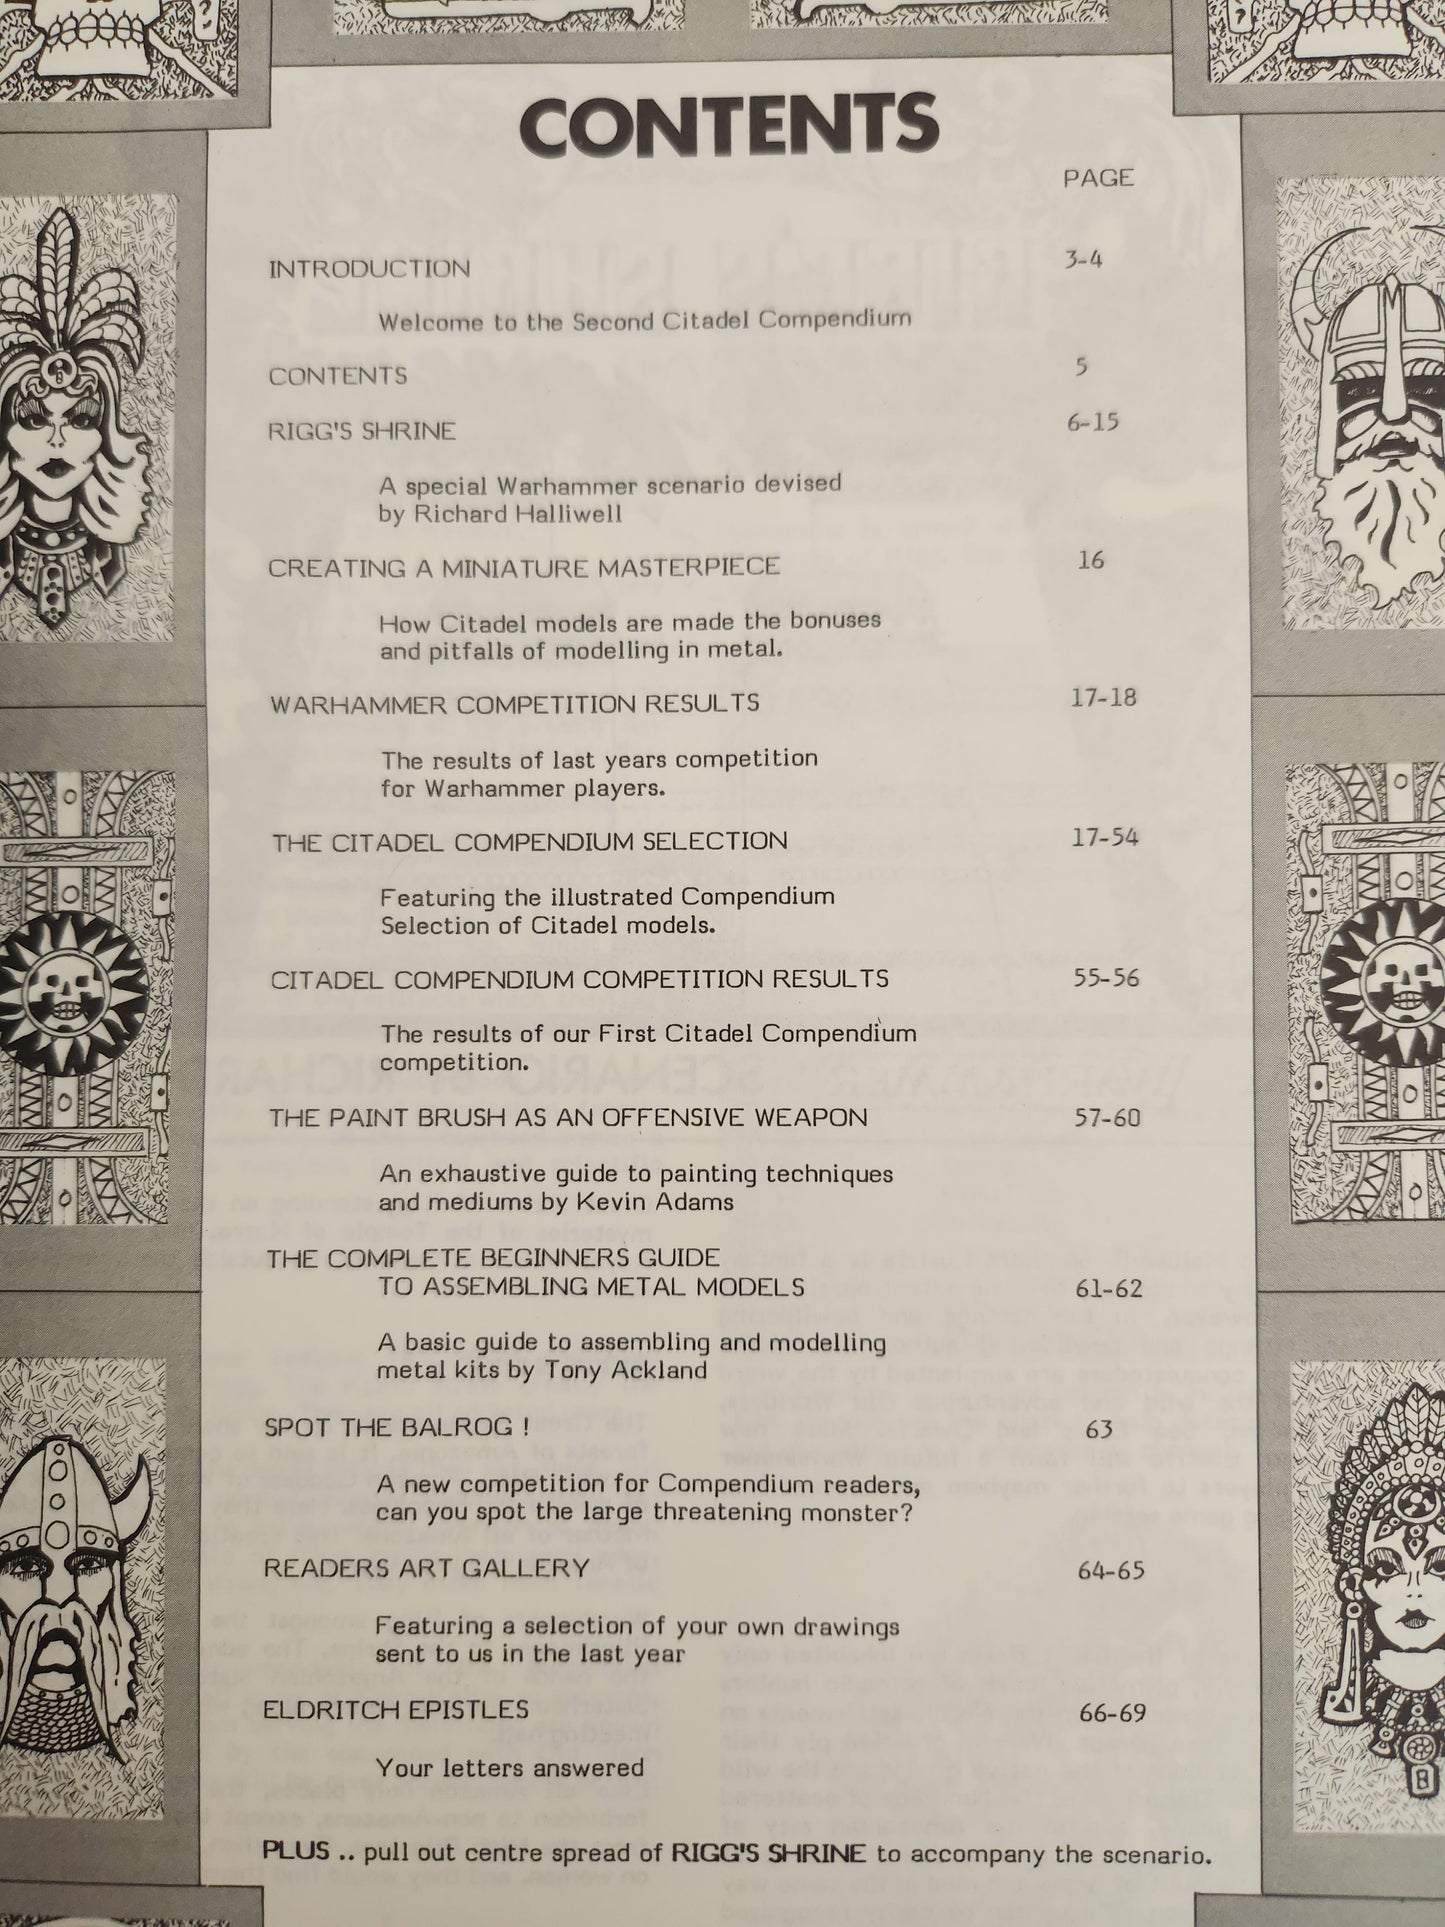 The Second Citadel Compendium - including "Rigg's Shrine w/Map" - NM condition